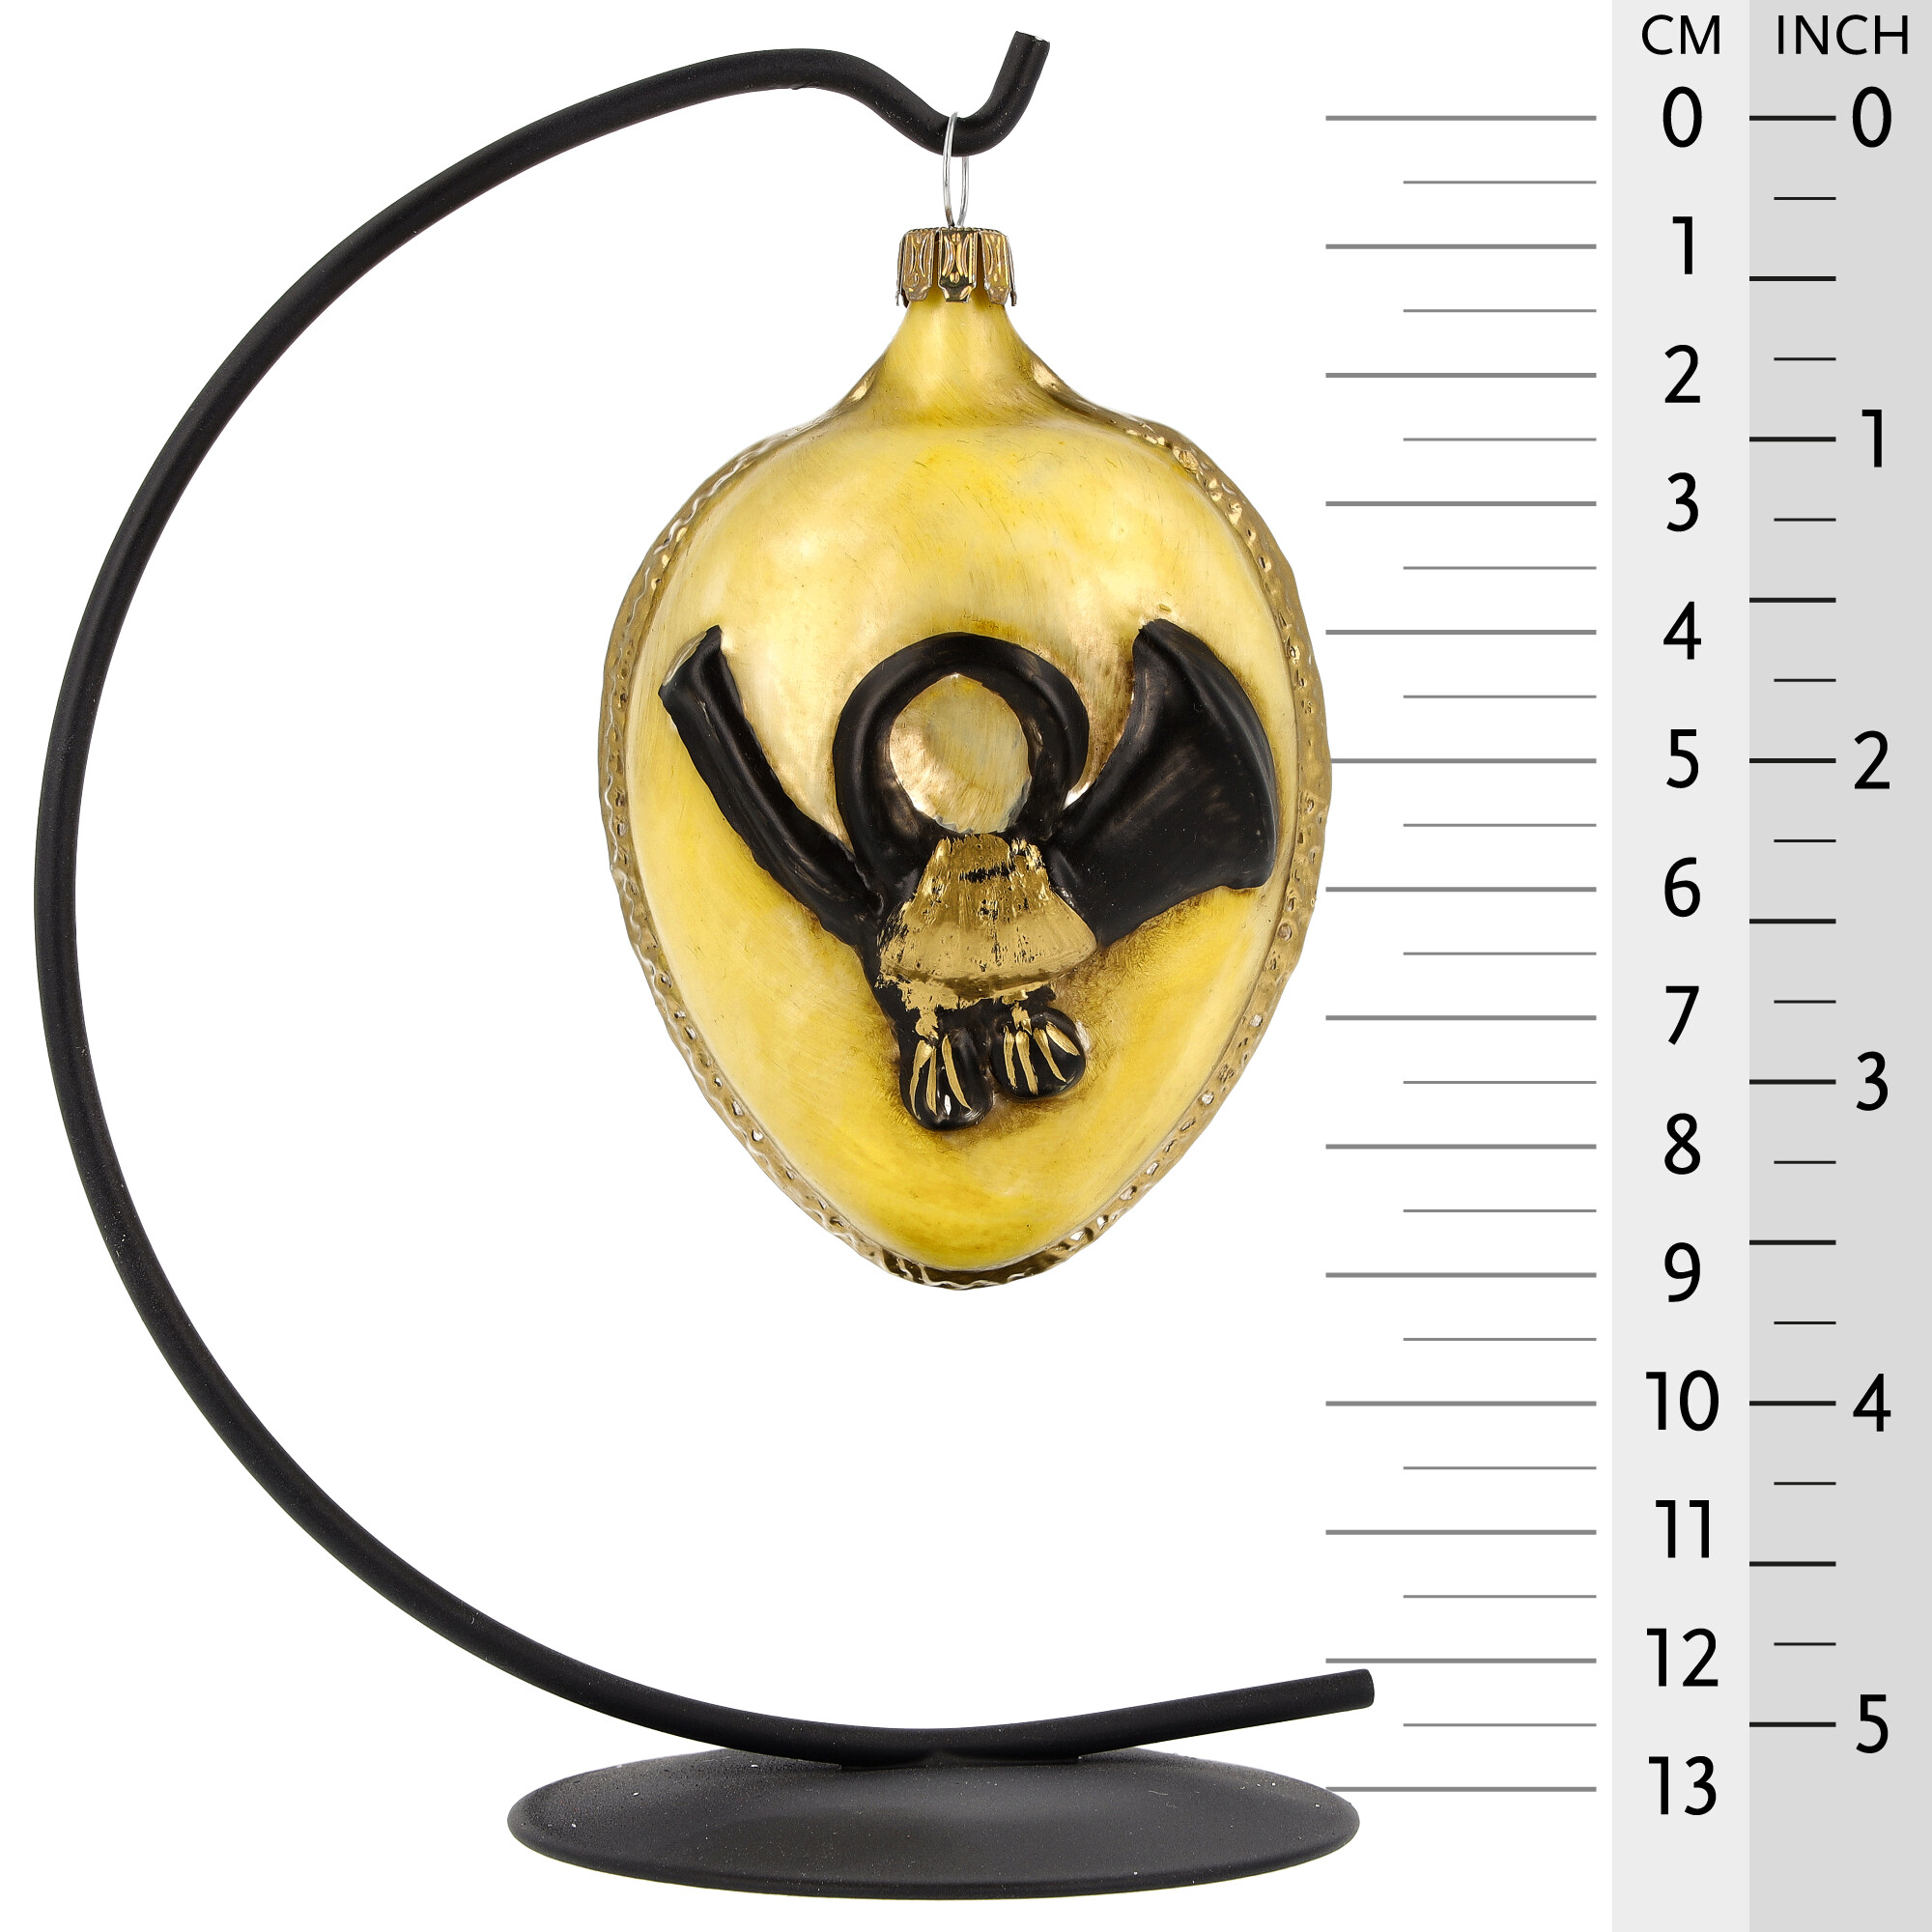 Retro Vintage style Christmas Glass Ornament - Post horn